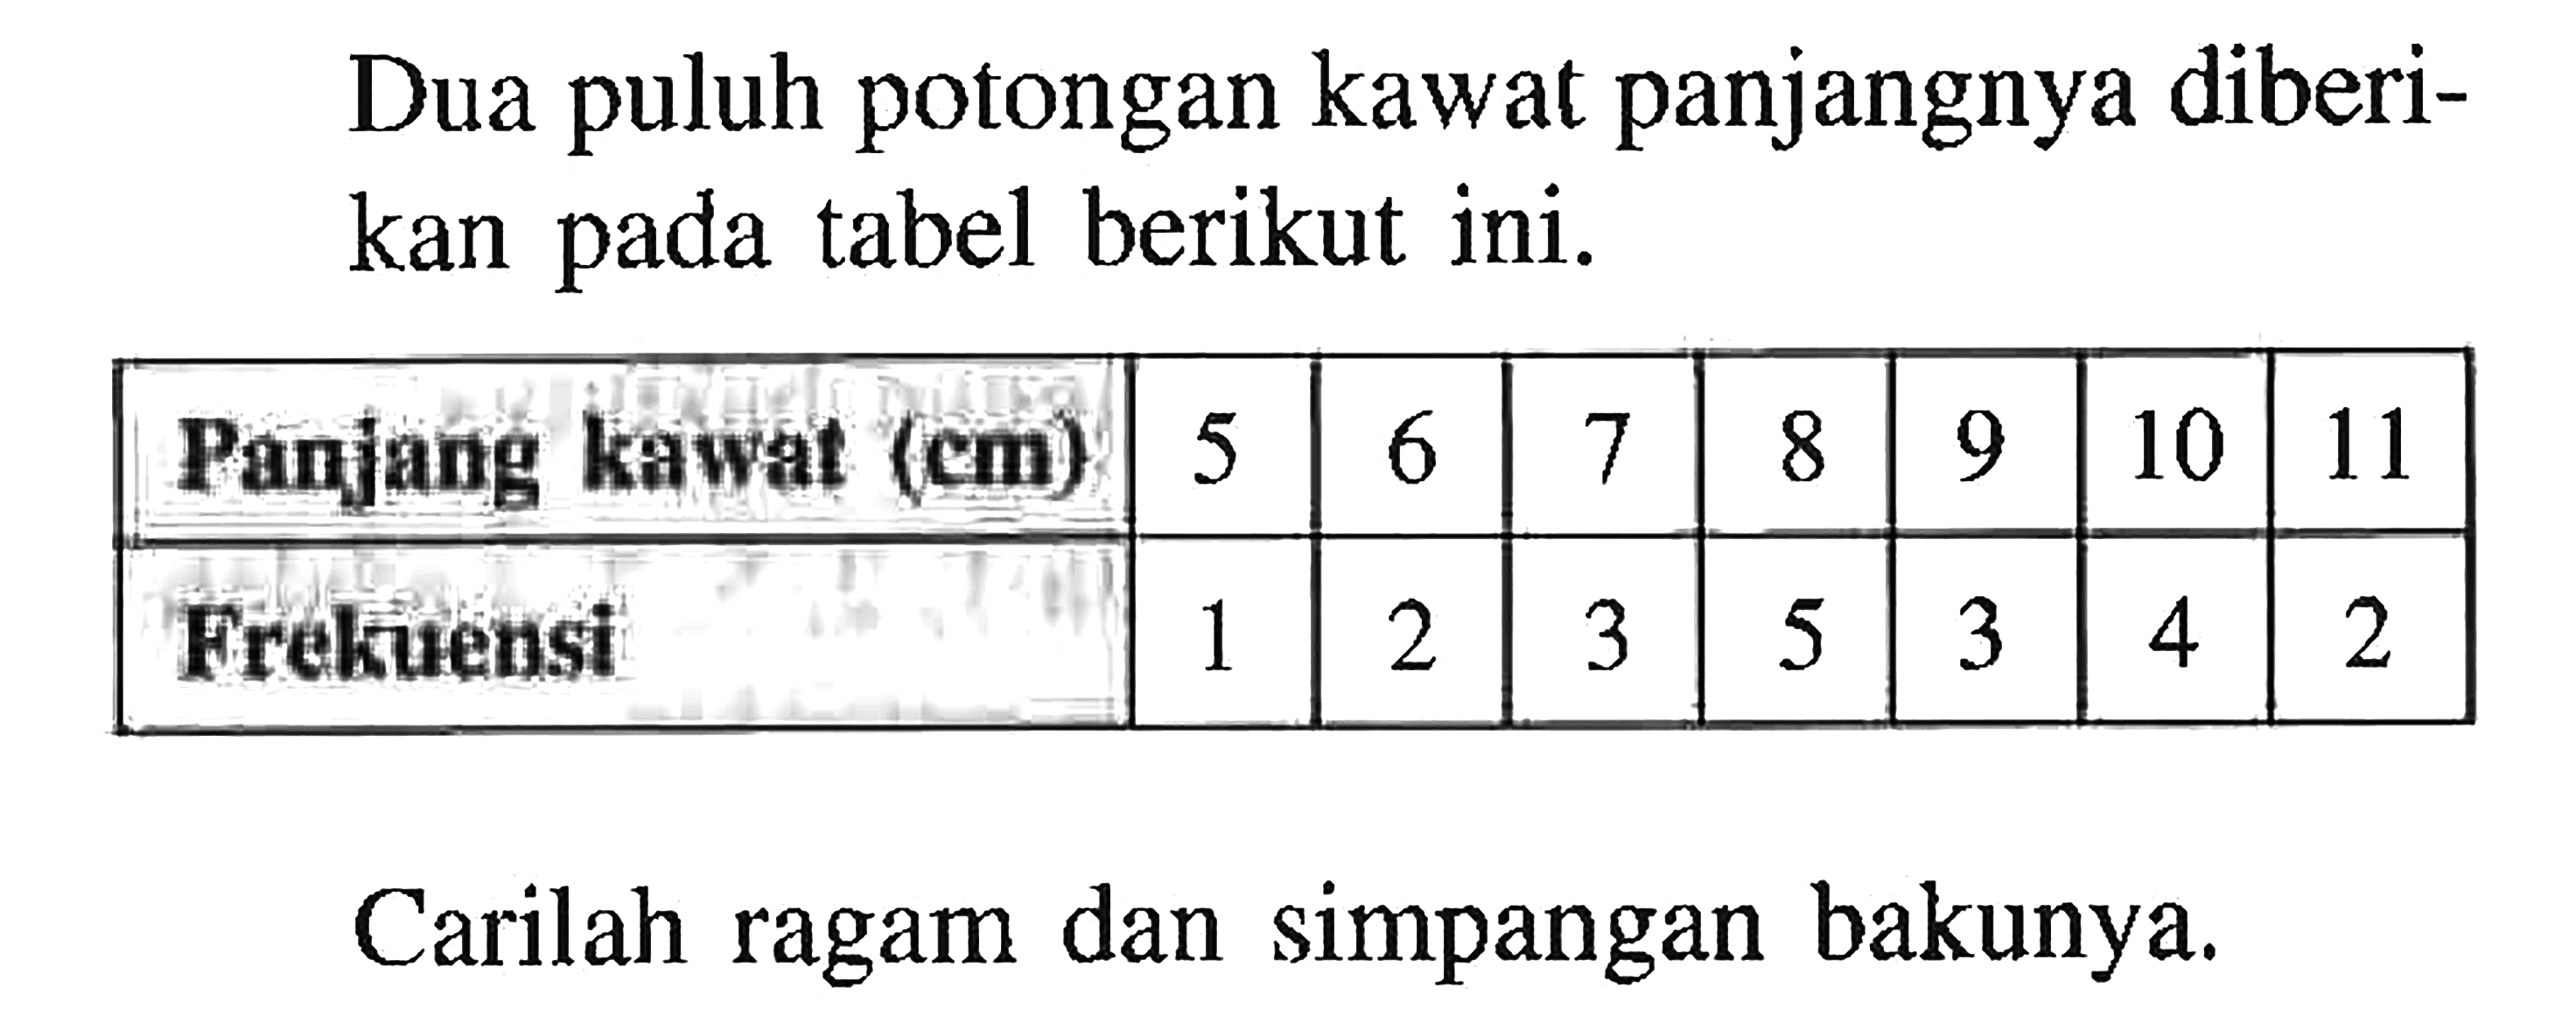 Dua puluh potongan kawat panjangnya diberikan pada tabel berikut ini. Panjang kawat (cm) 5 6 7 8 9 10 11 Frekuensi 1 2 3 5 3 4 2 Carilah ragam dan simpangan bakunya.